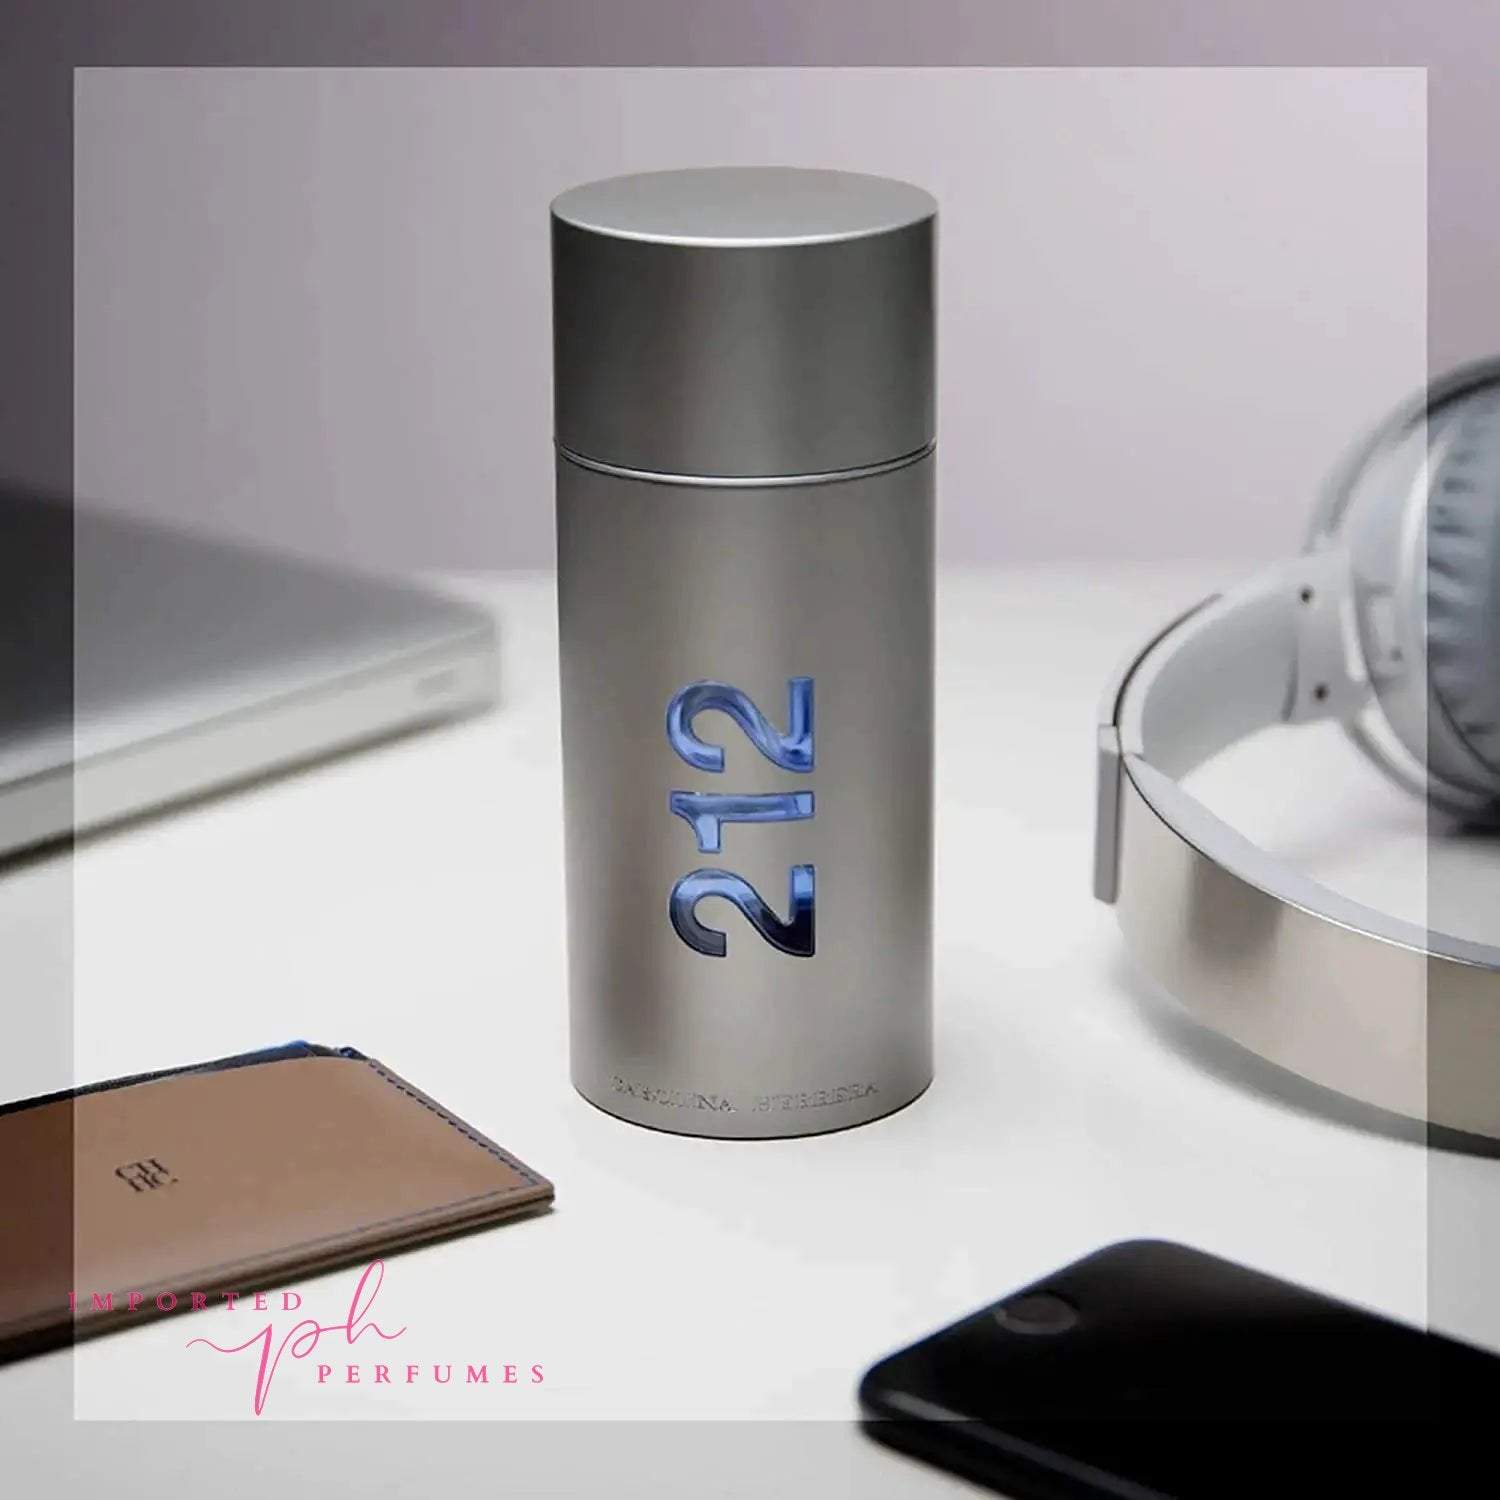 [TESTER] CH 212 For Men Eau De Toilette Spray 3.4oz / 100ml-Imported Perfumes Co-100ml,212,carolina,carolina herrerra,CH,Ck,men,NYC,test,TESTER